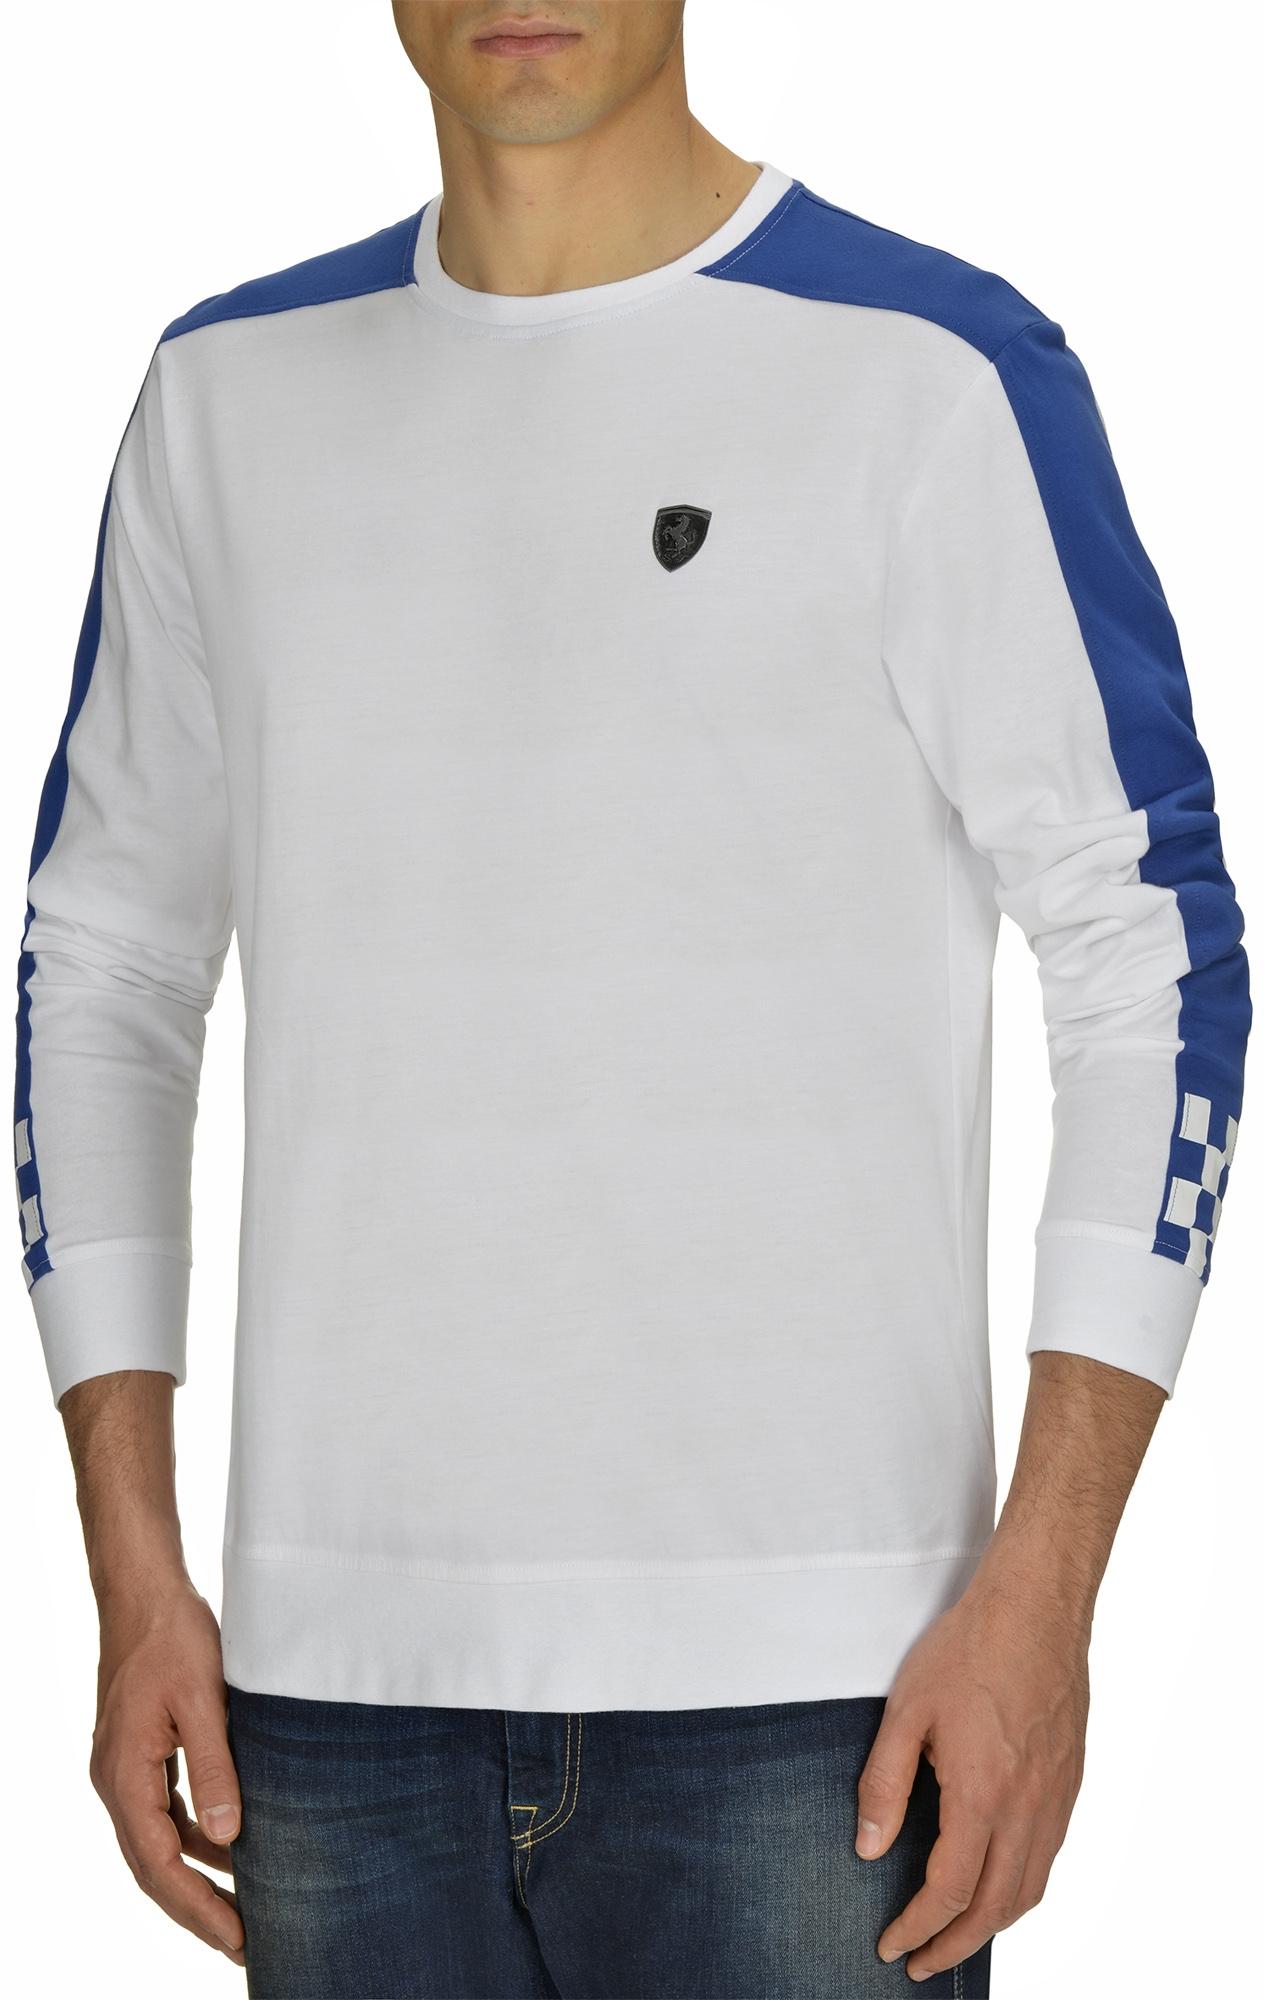 Long-Sleeve Cotton T-Shirt